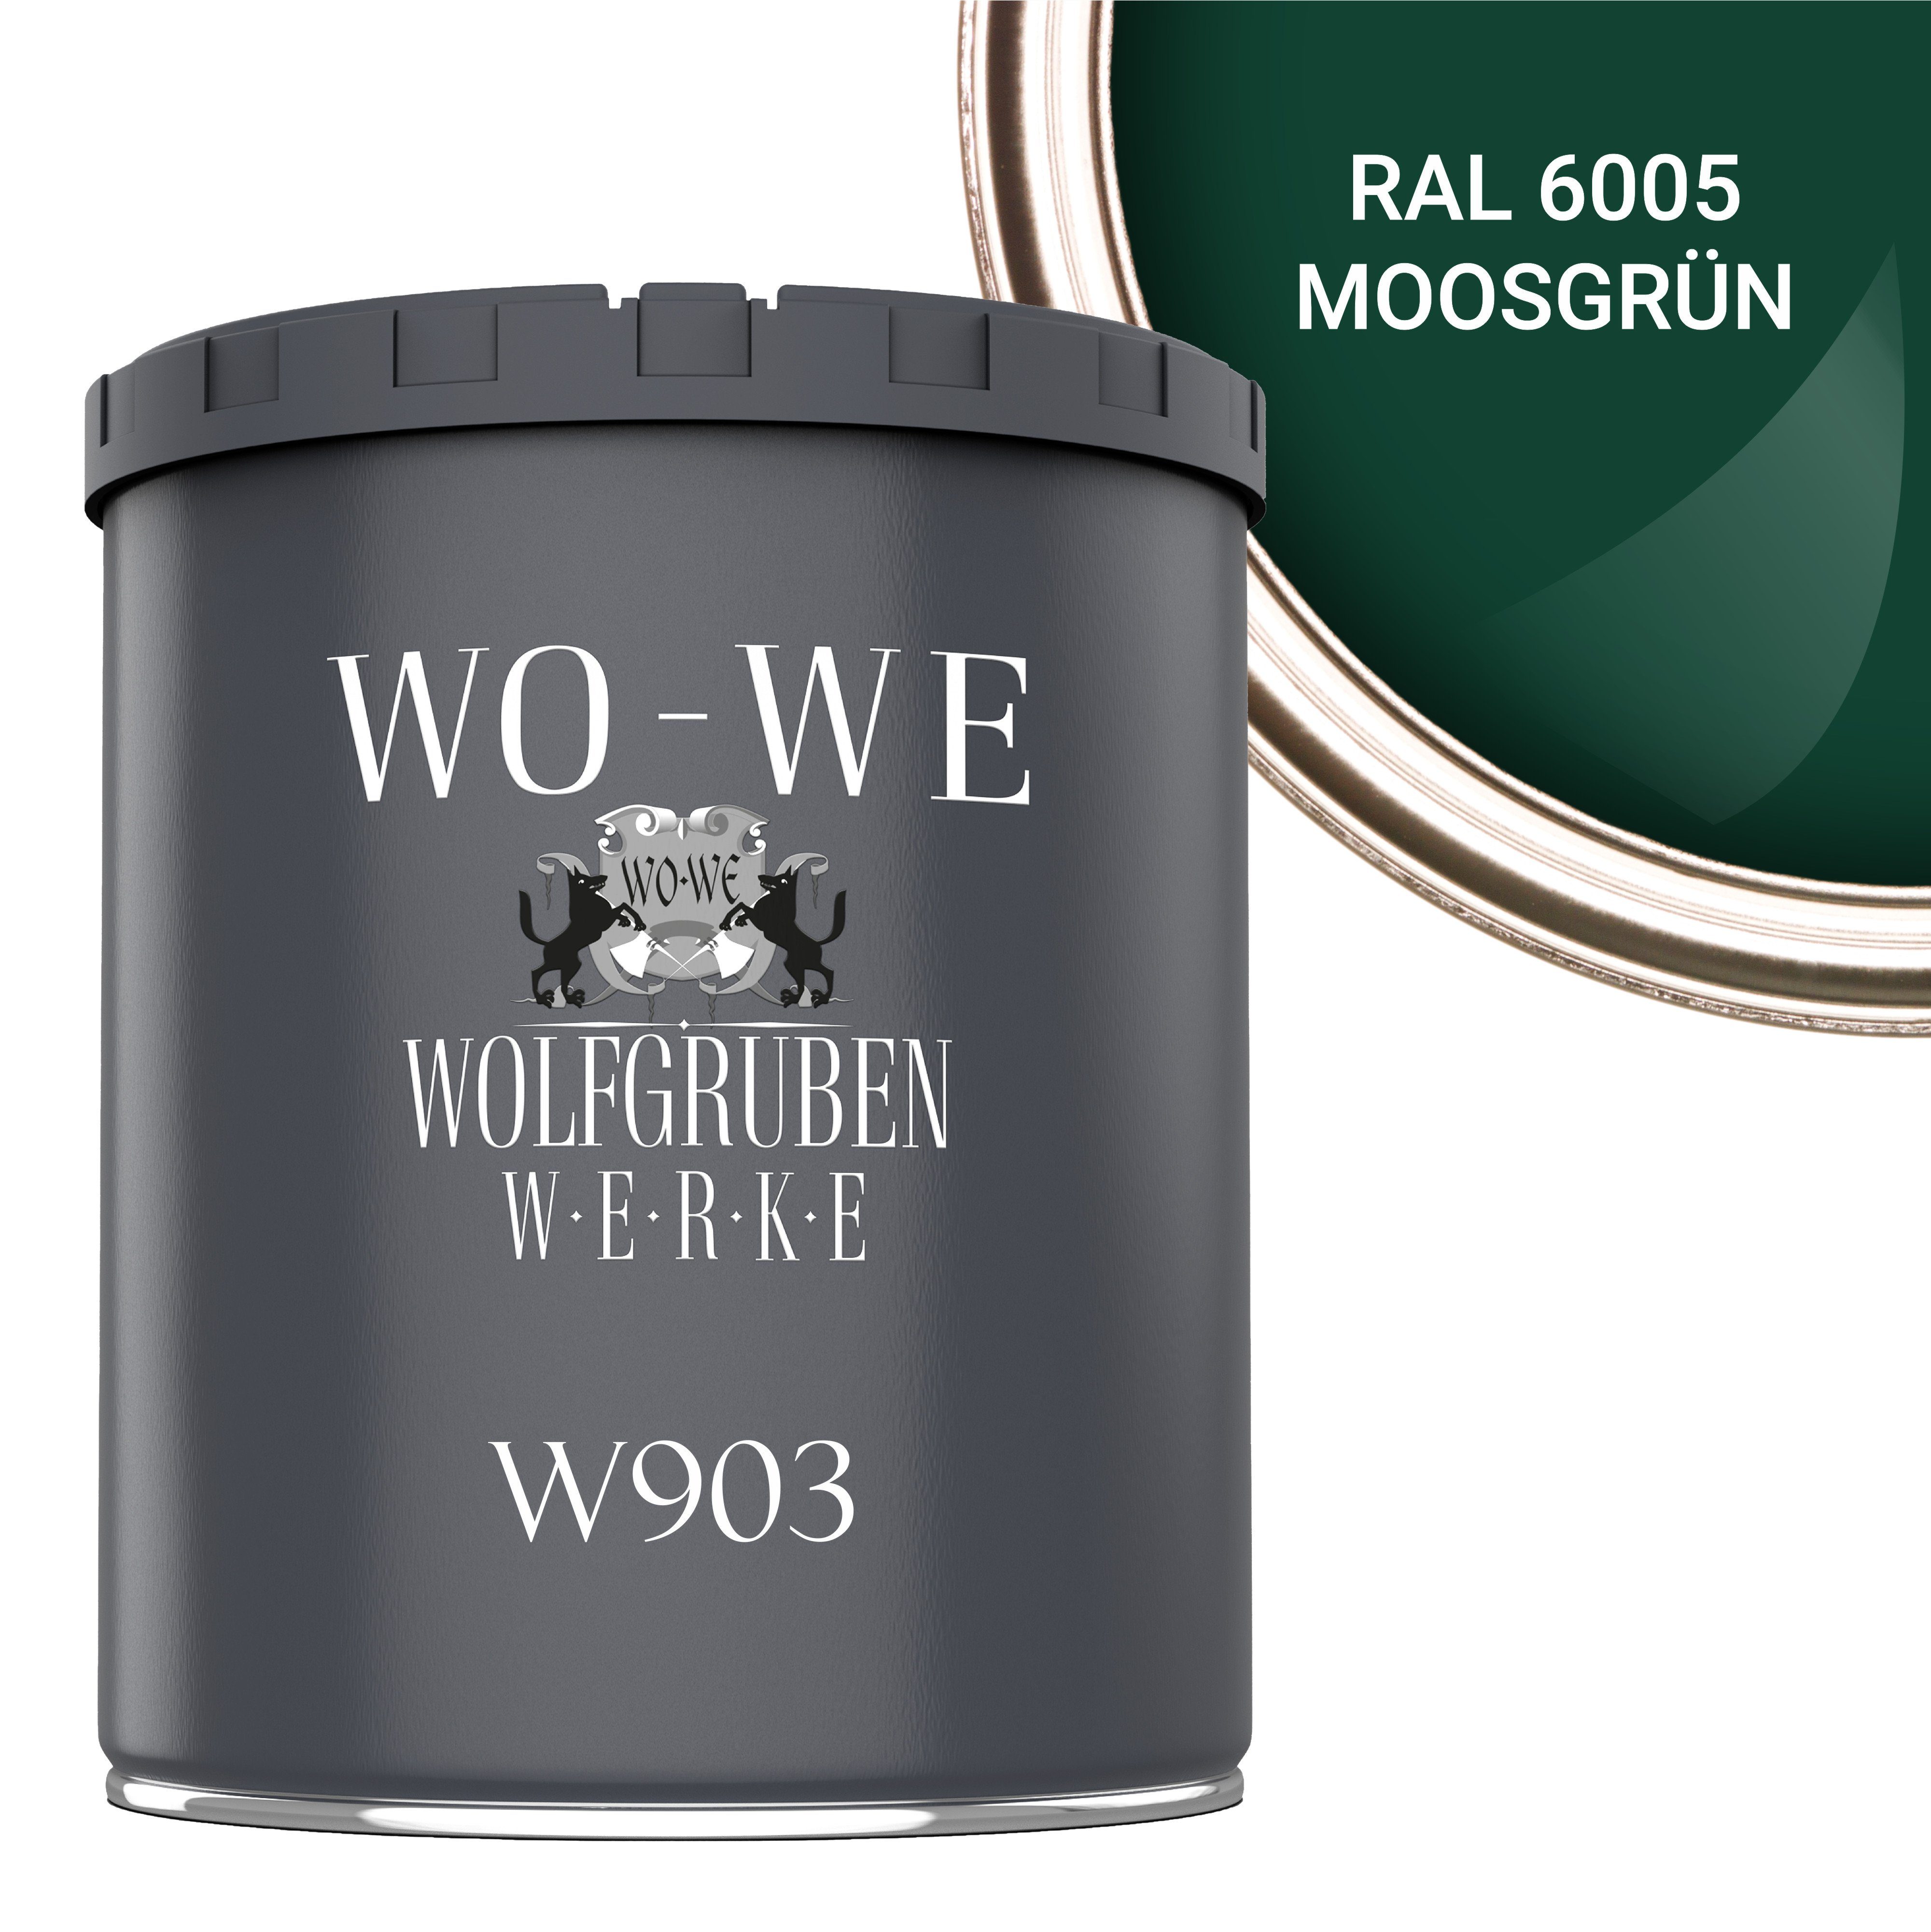 Heizkörperfarbe RAL WO-WE W903, Moosgrün 6005 Wasserbasis Heizkörperlack 1-10L, Heizungsfarbe